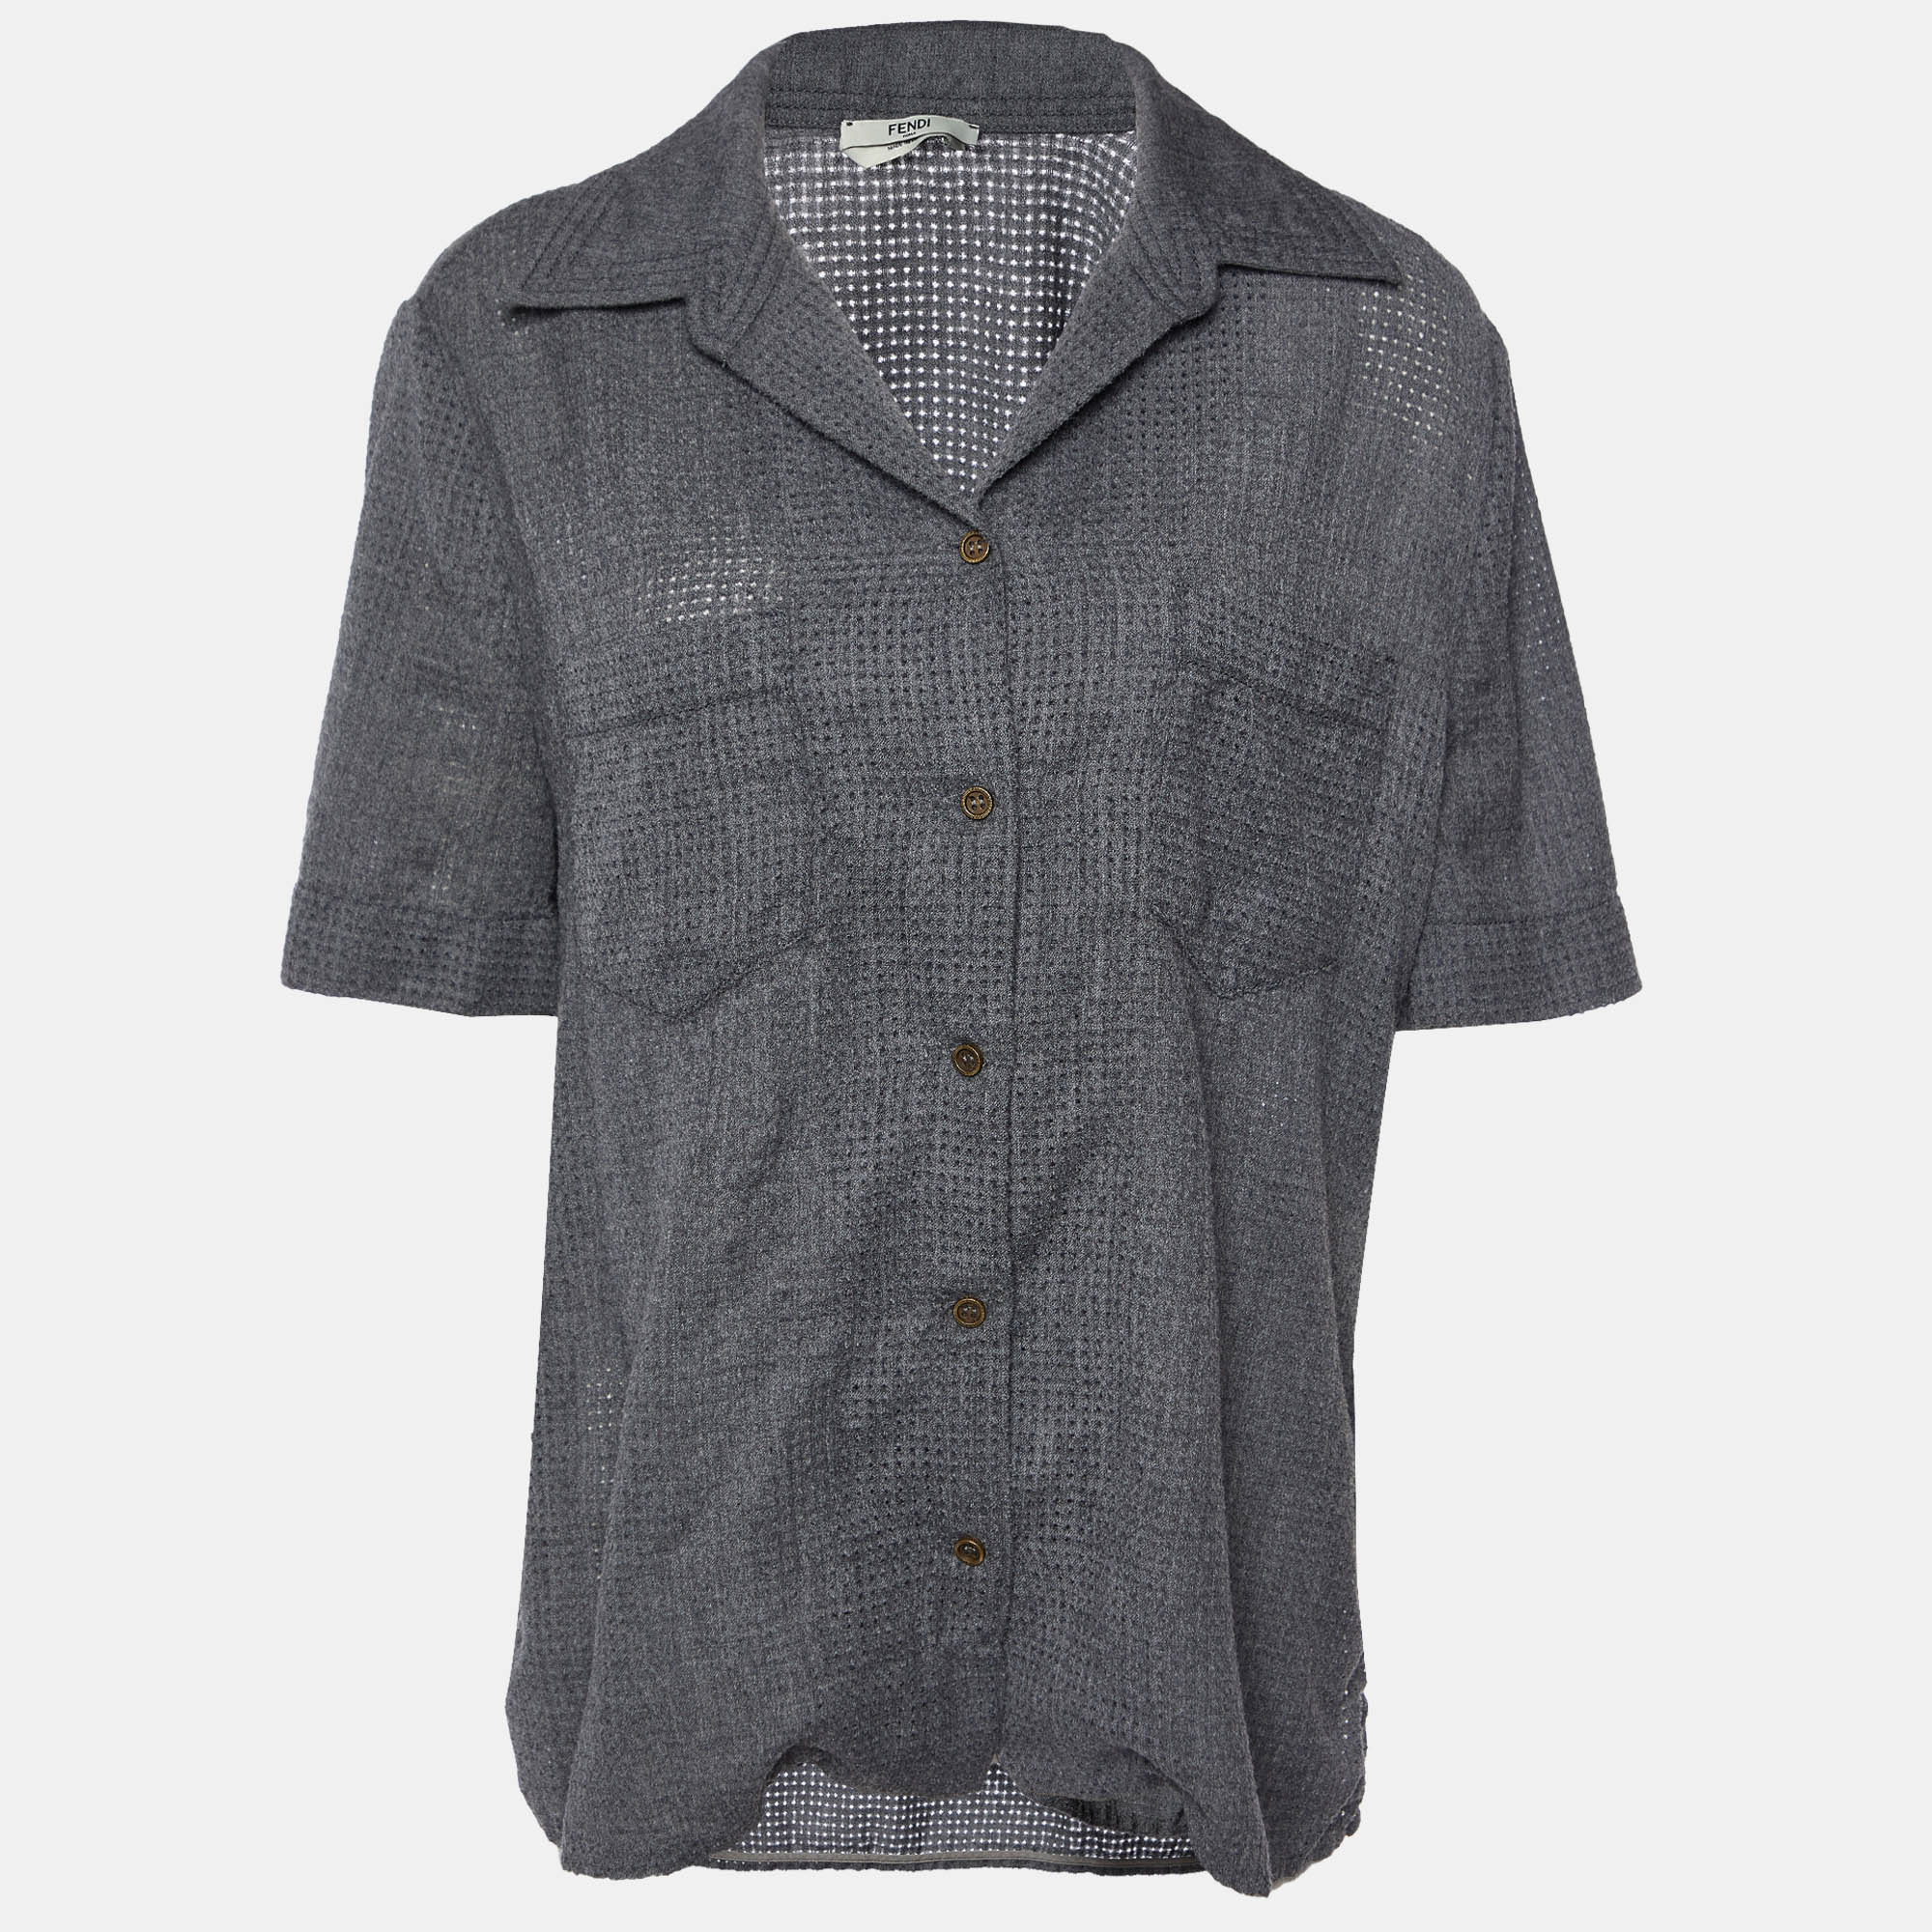 Fendi grey perforated wool short sleeve shirt m